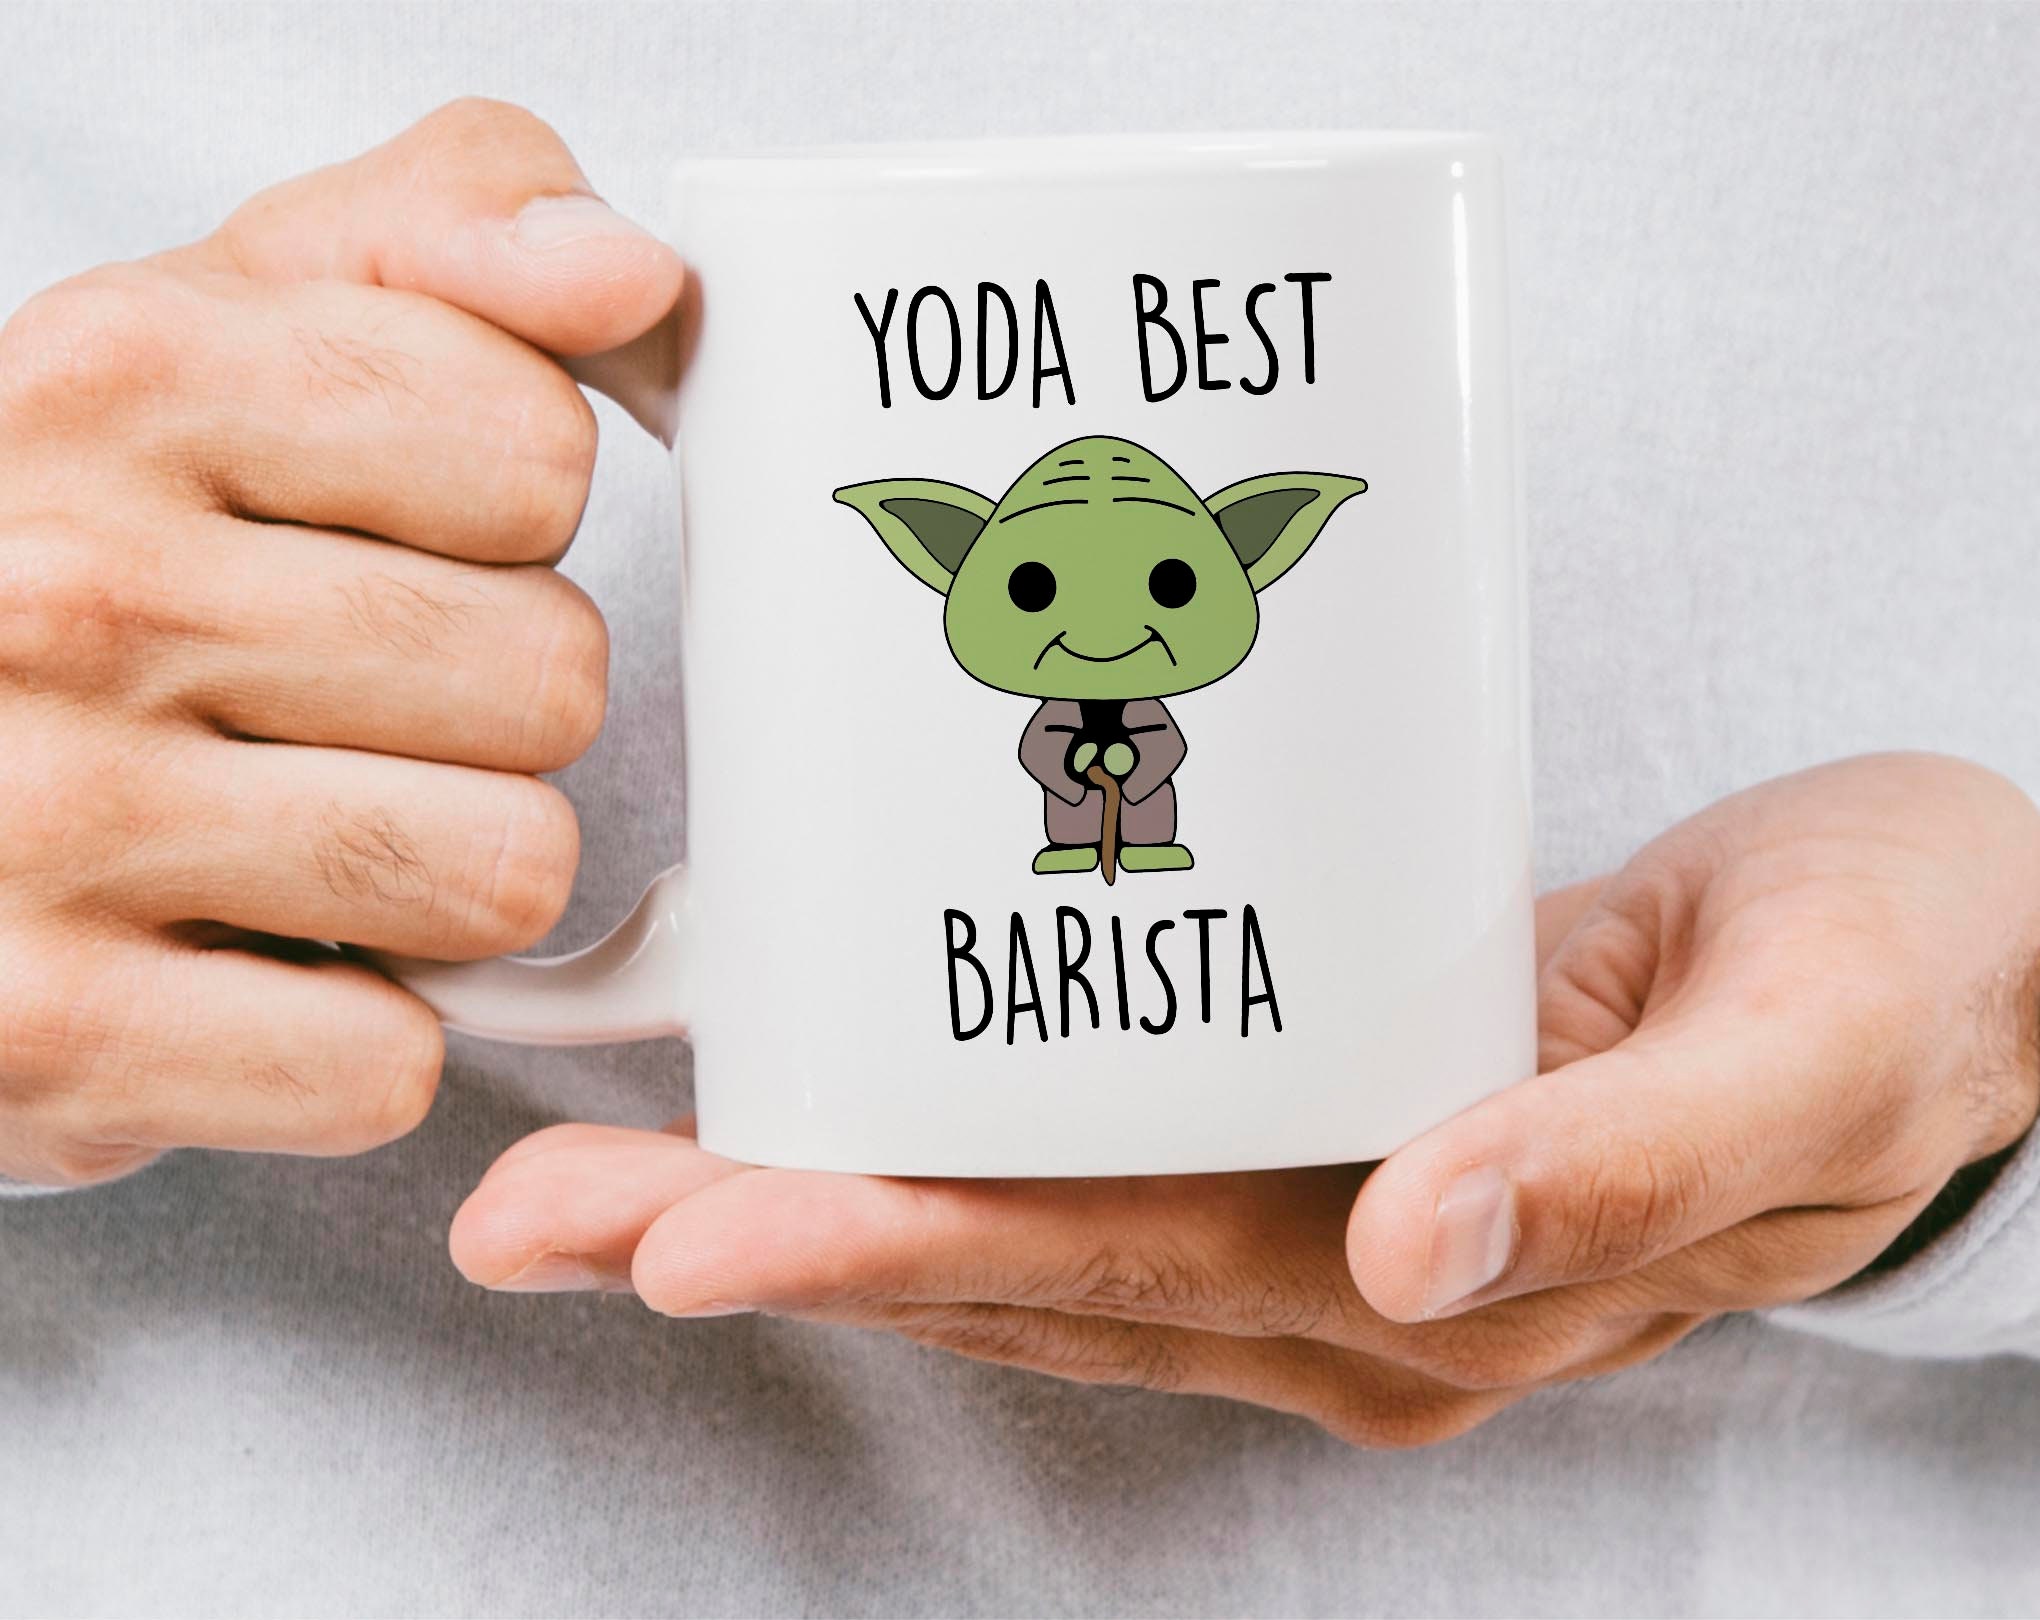 Barista Gift, Barista Mug, Barista Funny Unicorn Mug, Barista Cup, Barista  Coffee Mug, Best Barista Mug, Barista Gifts, Other Baristas Gift 